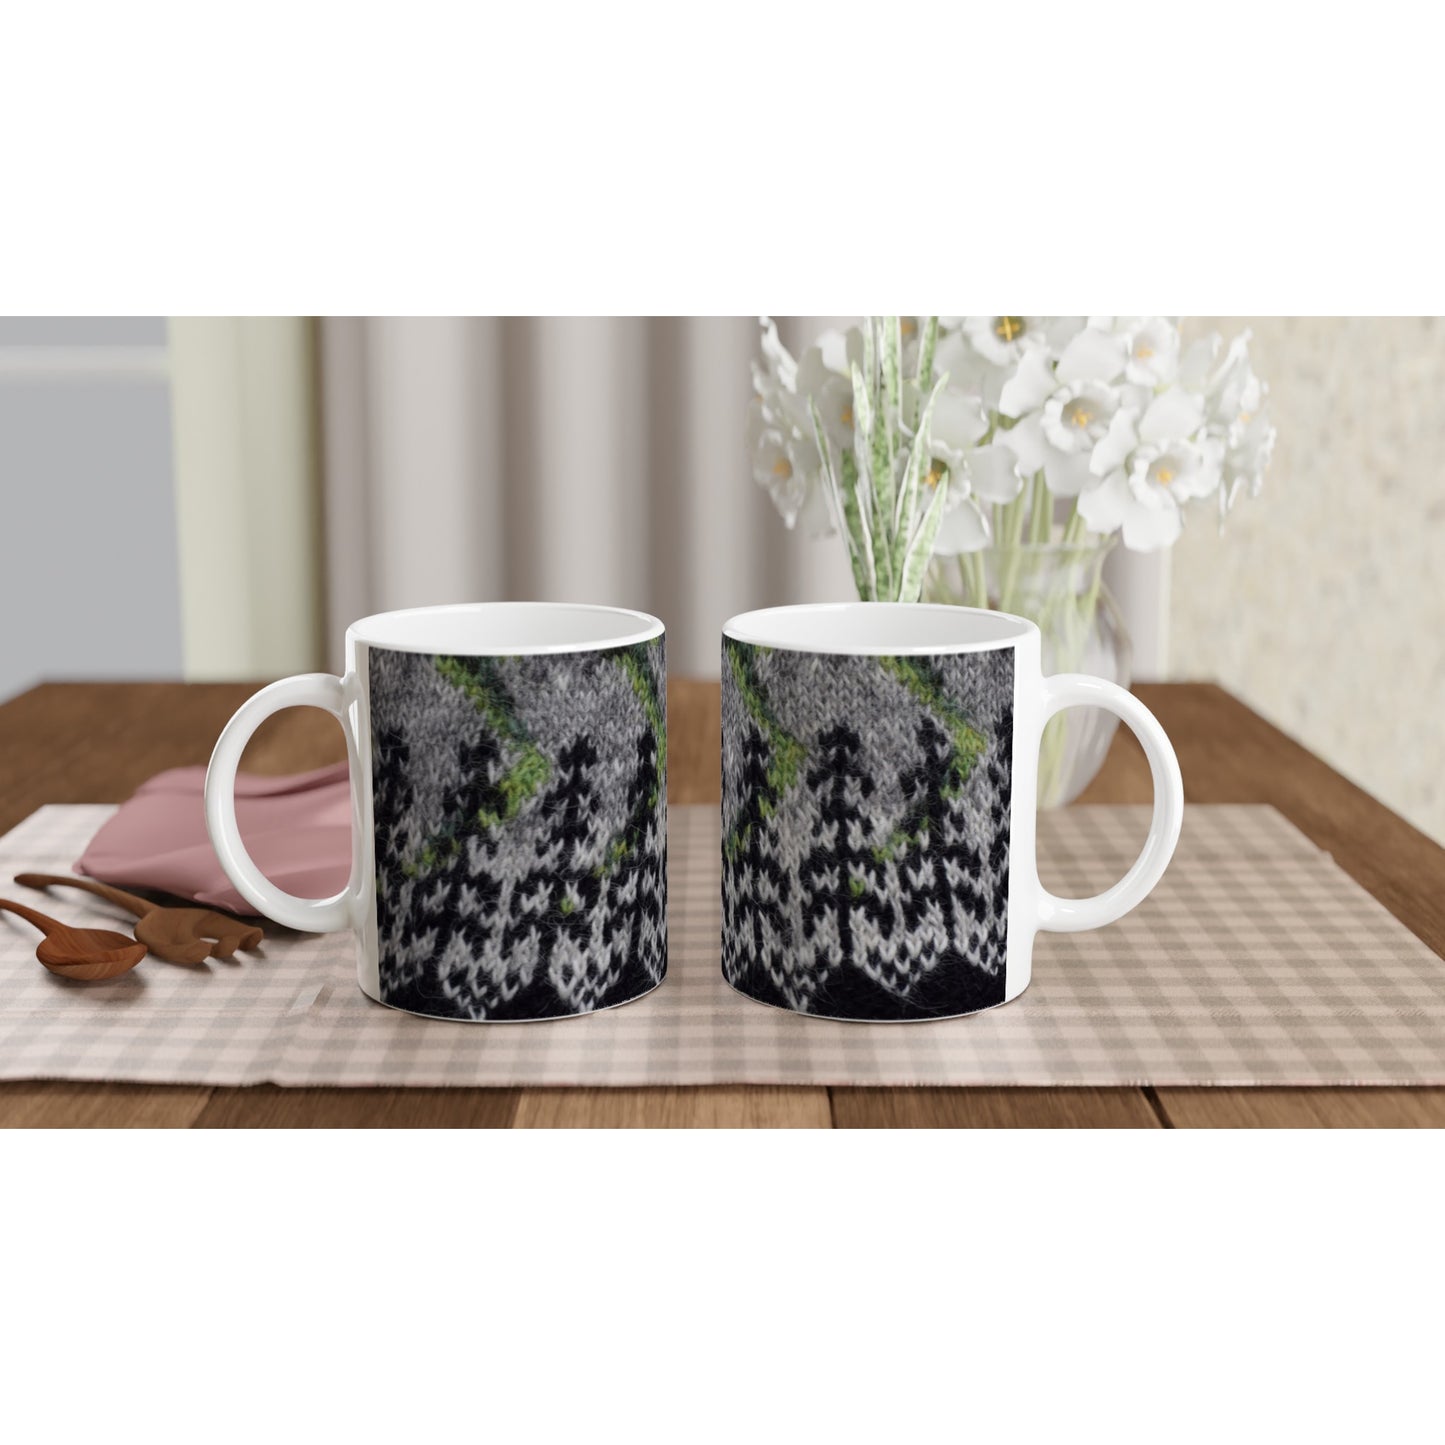 Mug with Icelandic knit pattern - Northern Lights